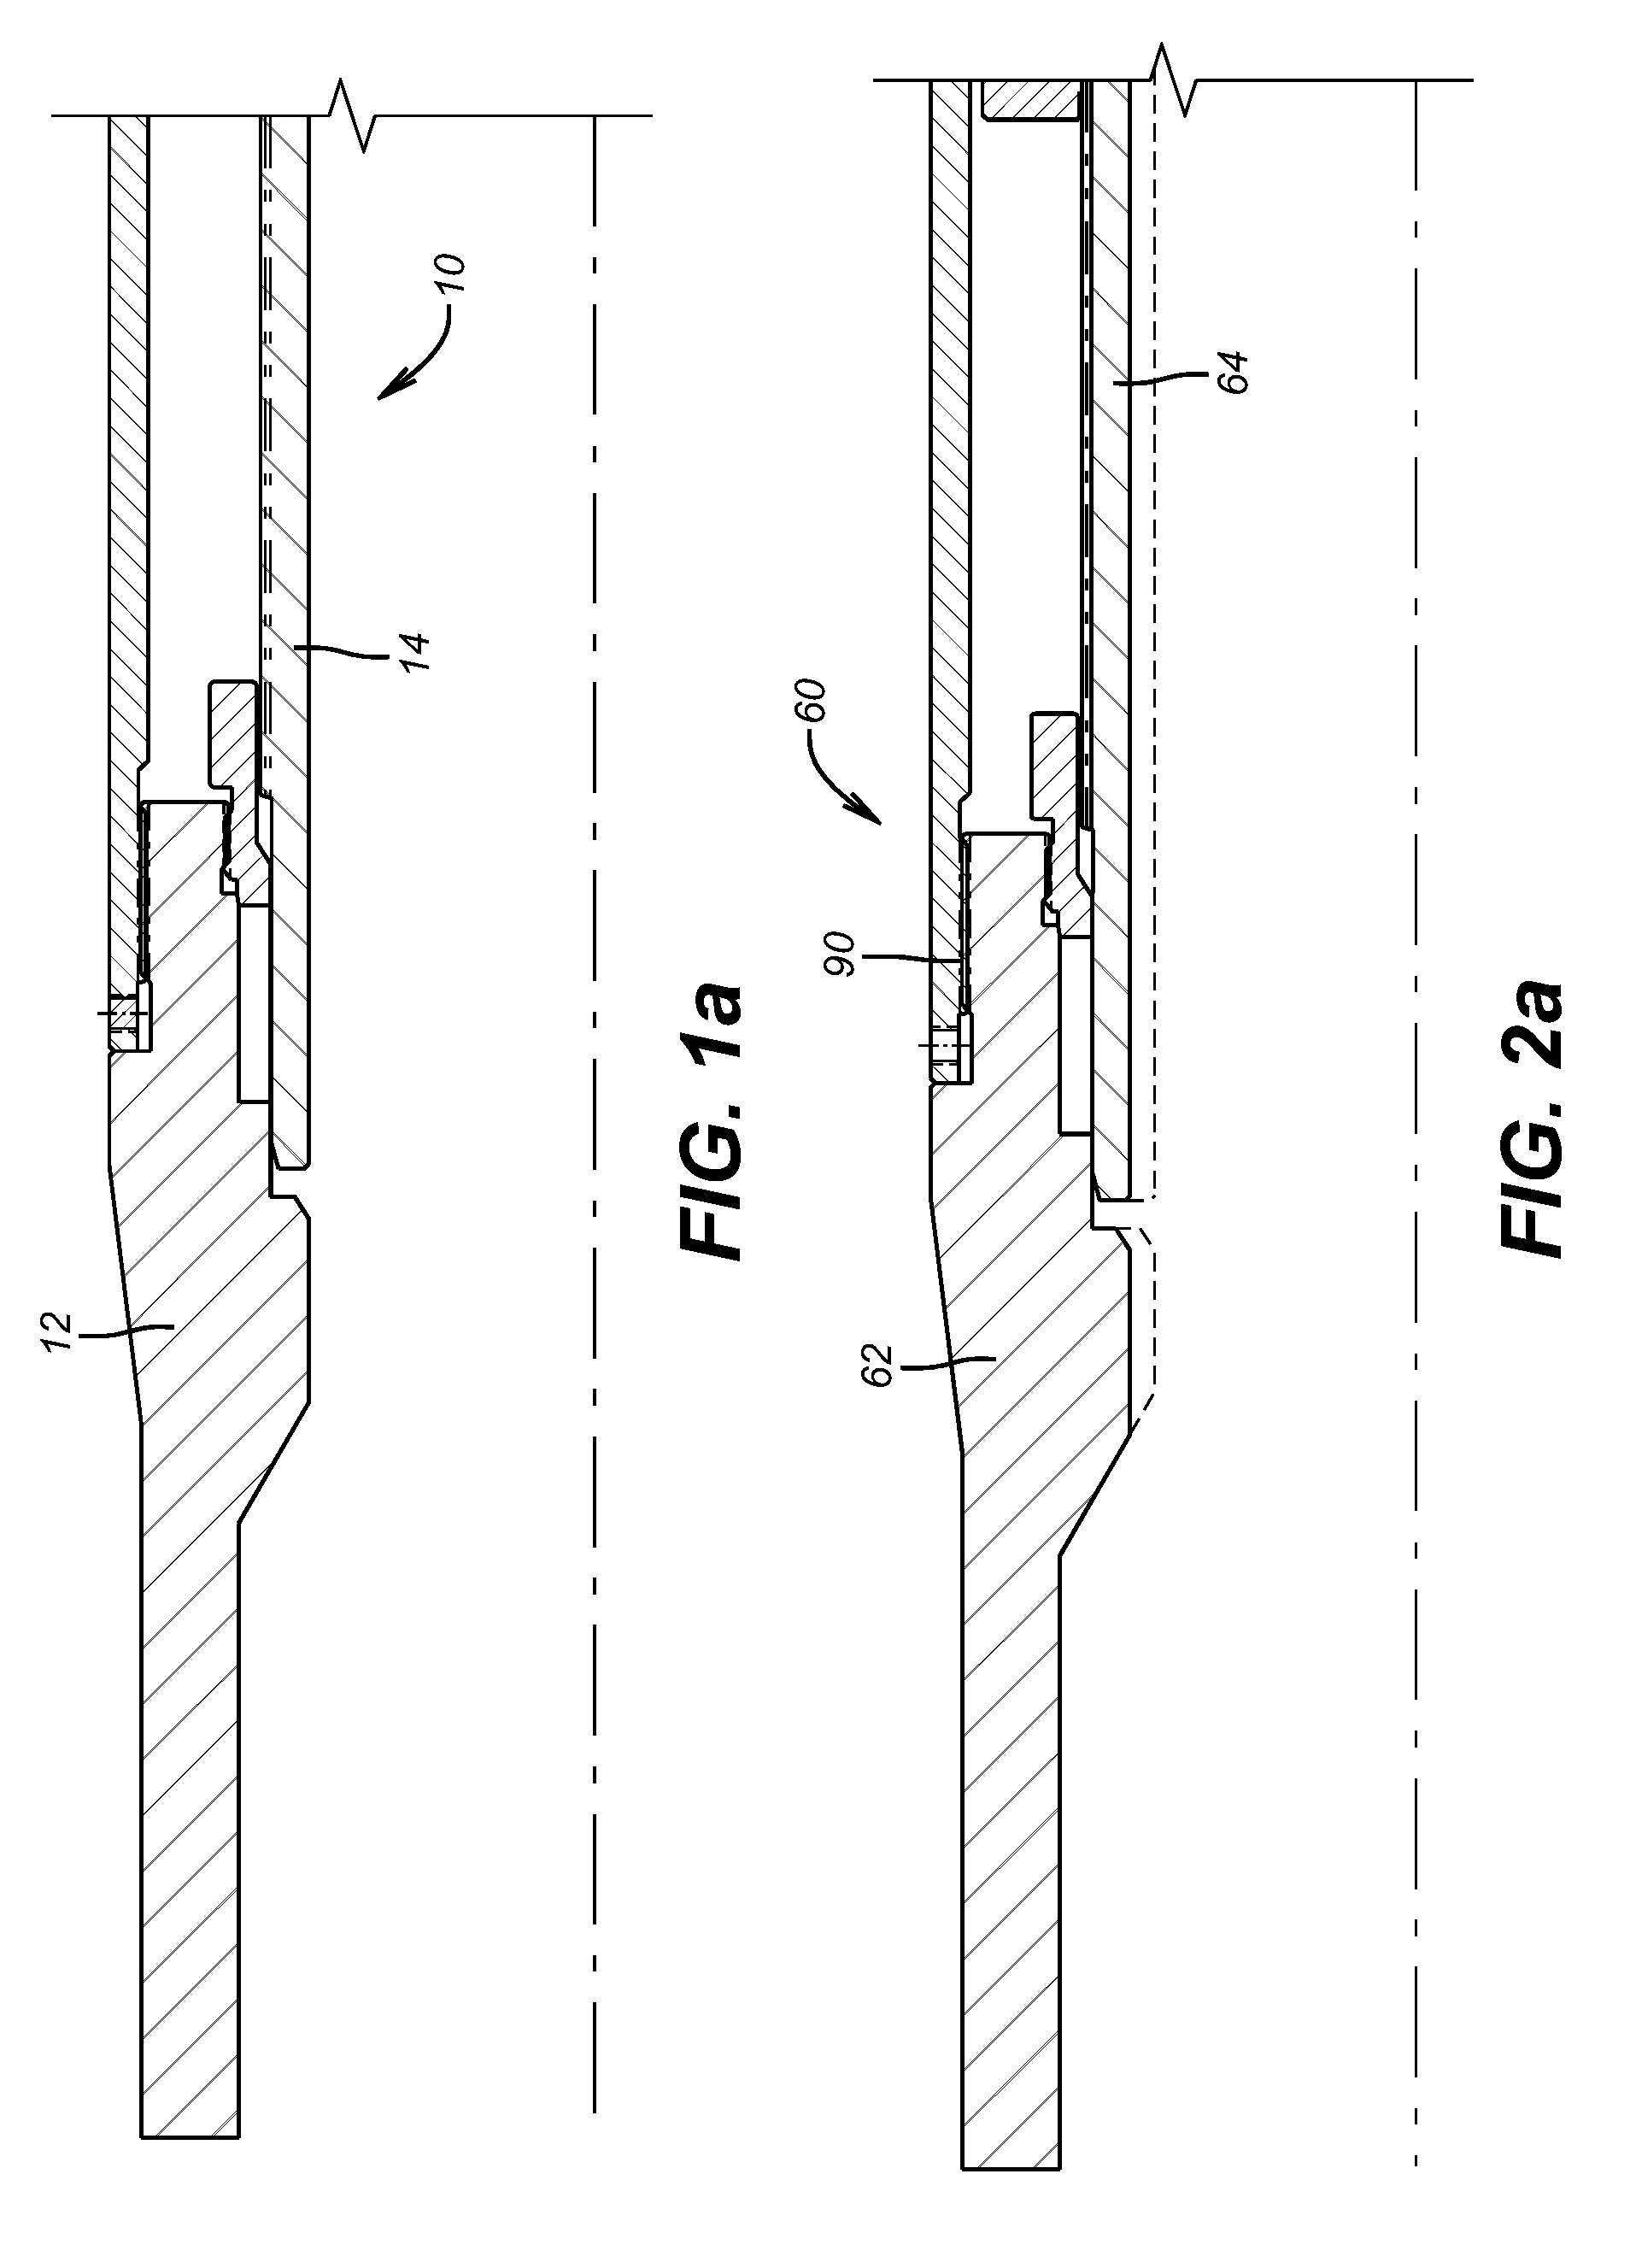 Modular hydraulic operator for a subterranean tool